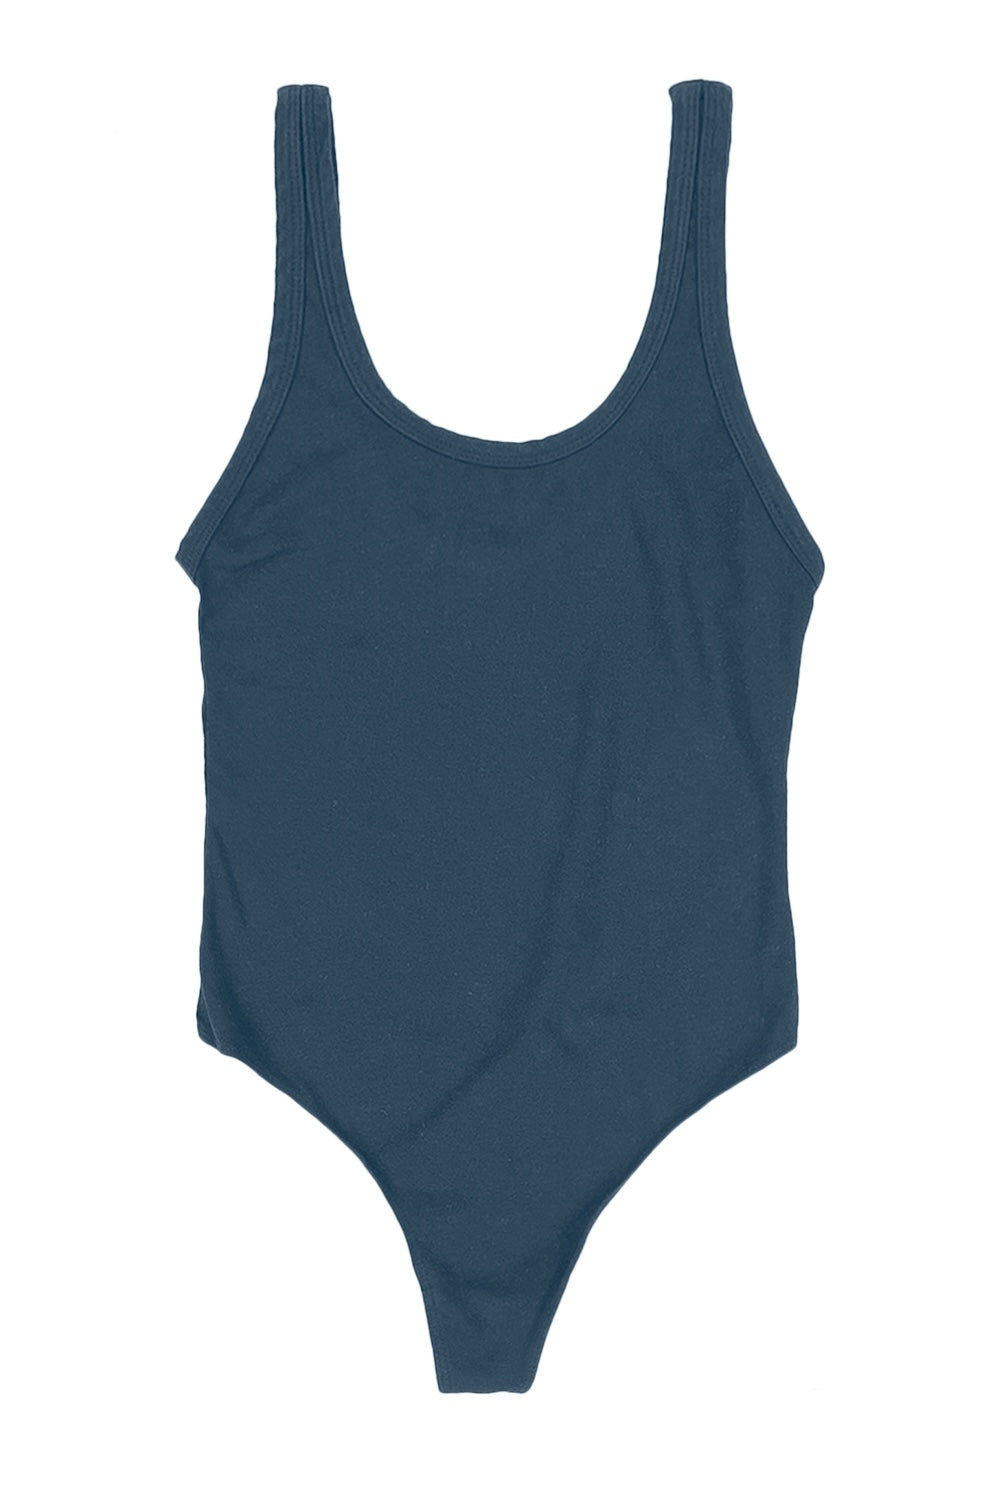 Bodysuit | Jungmaven Hemp Clothing & Accessories / Color: Navy